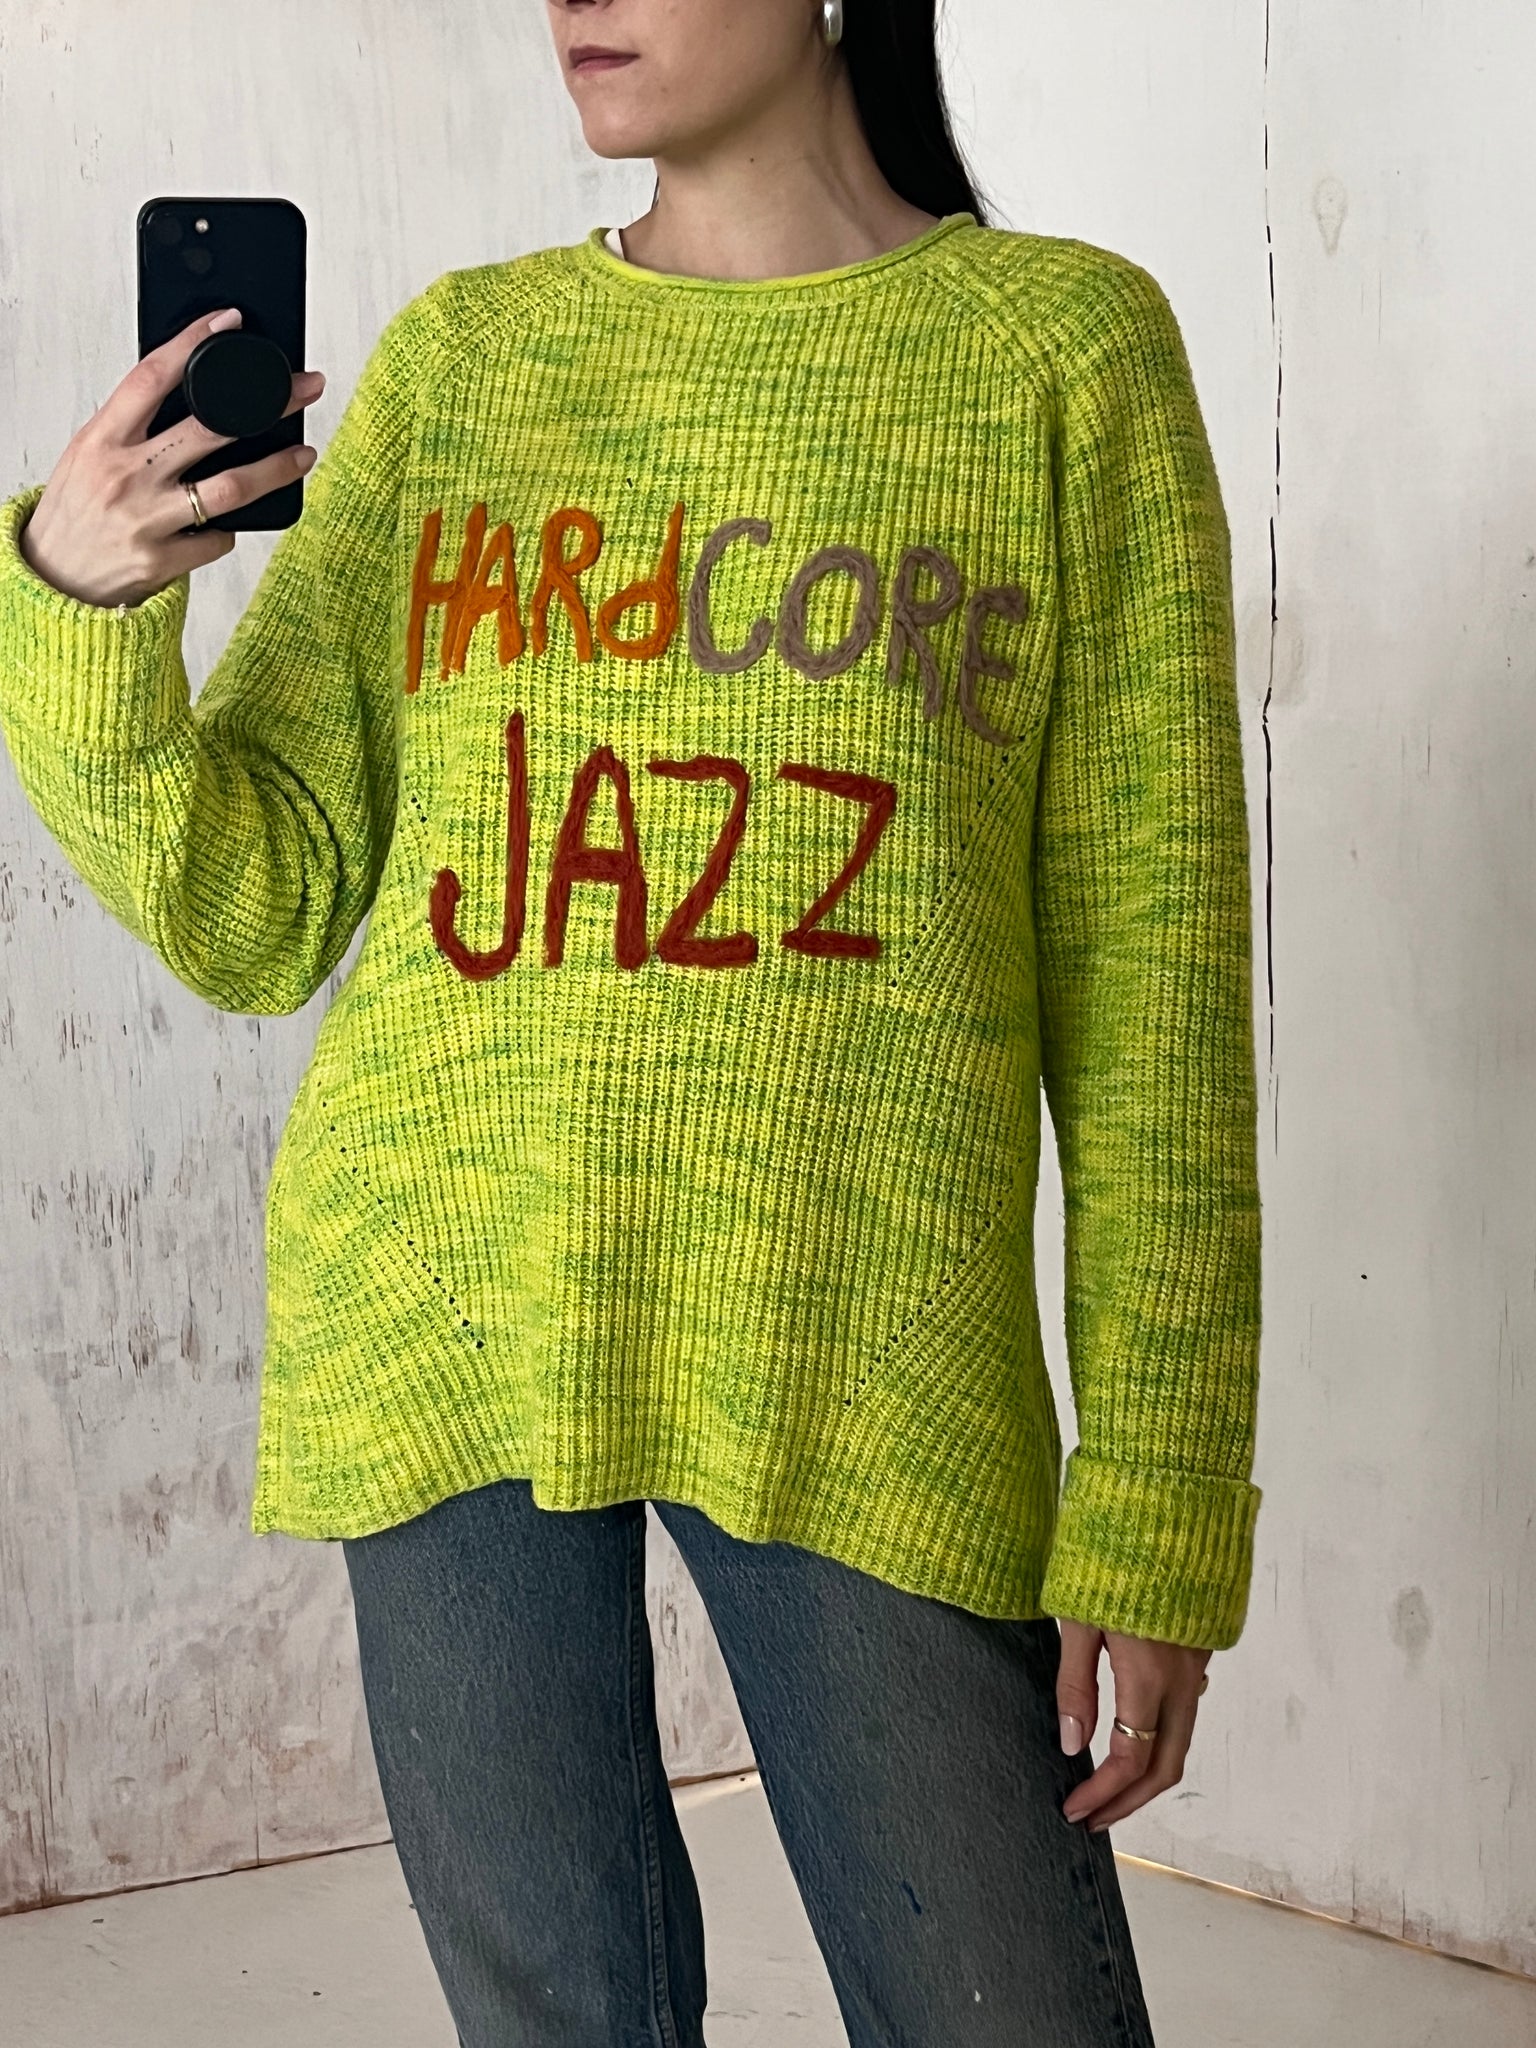 Hardcore jazz sweater